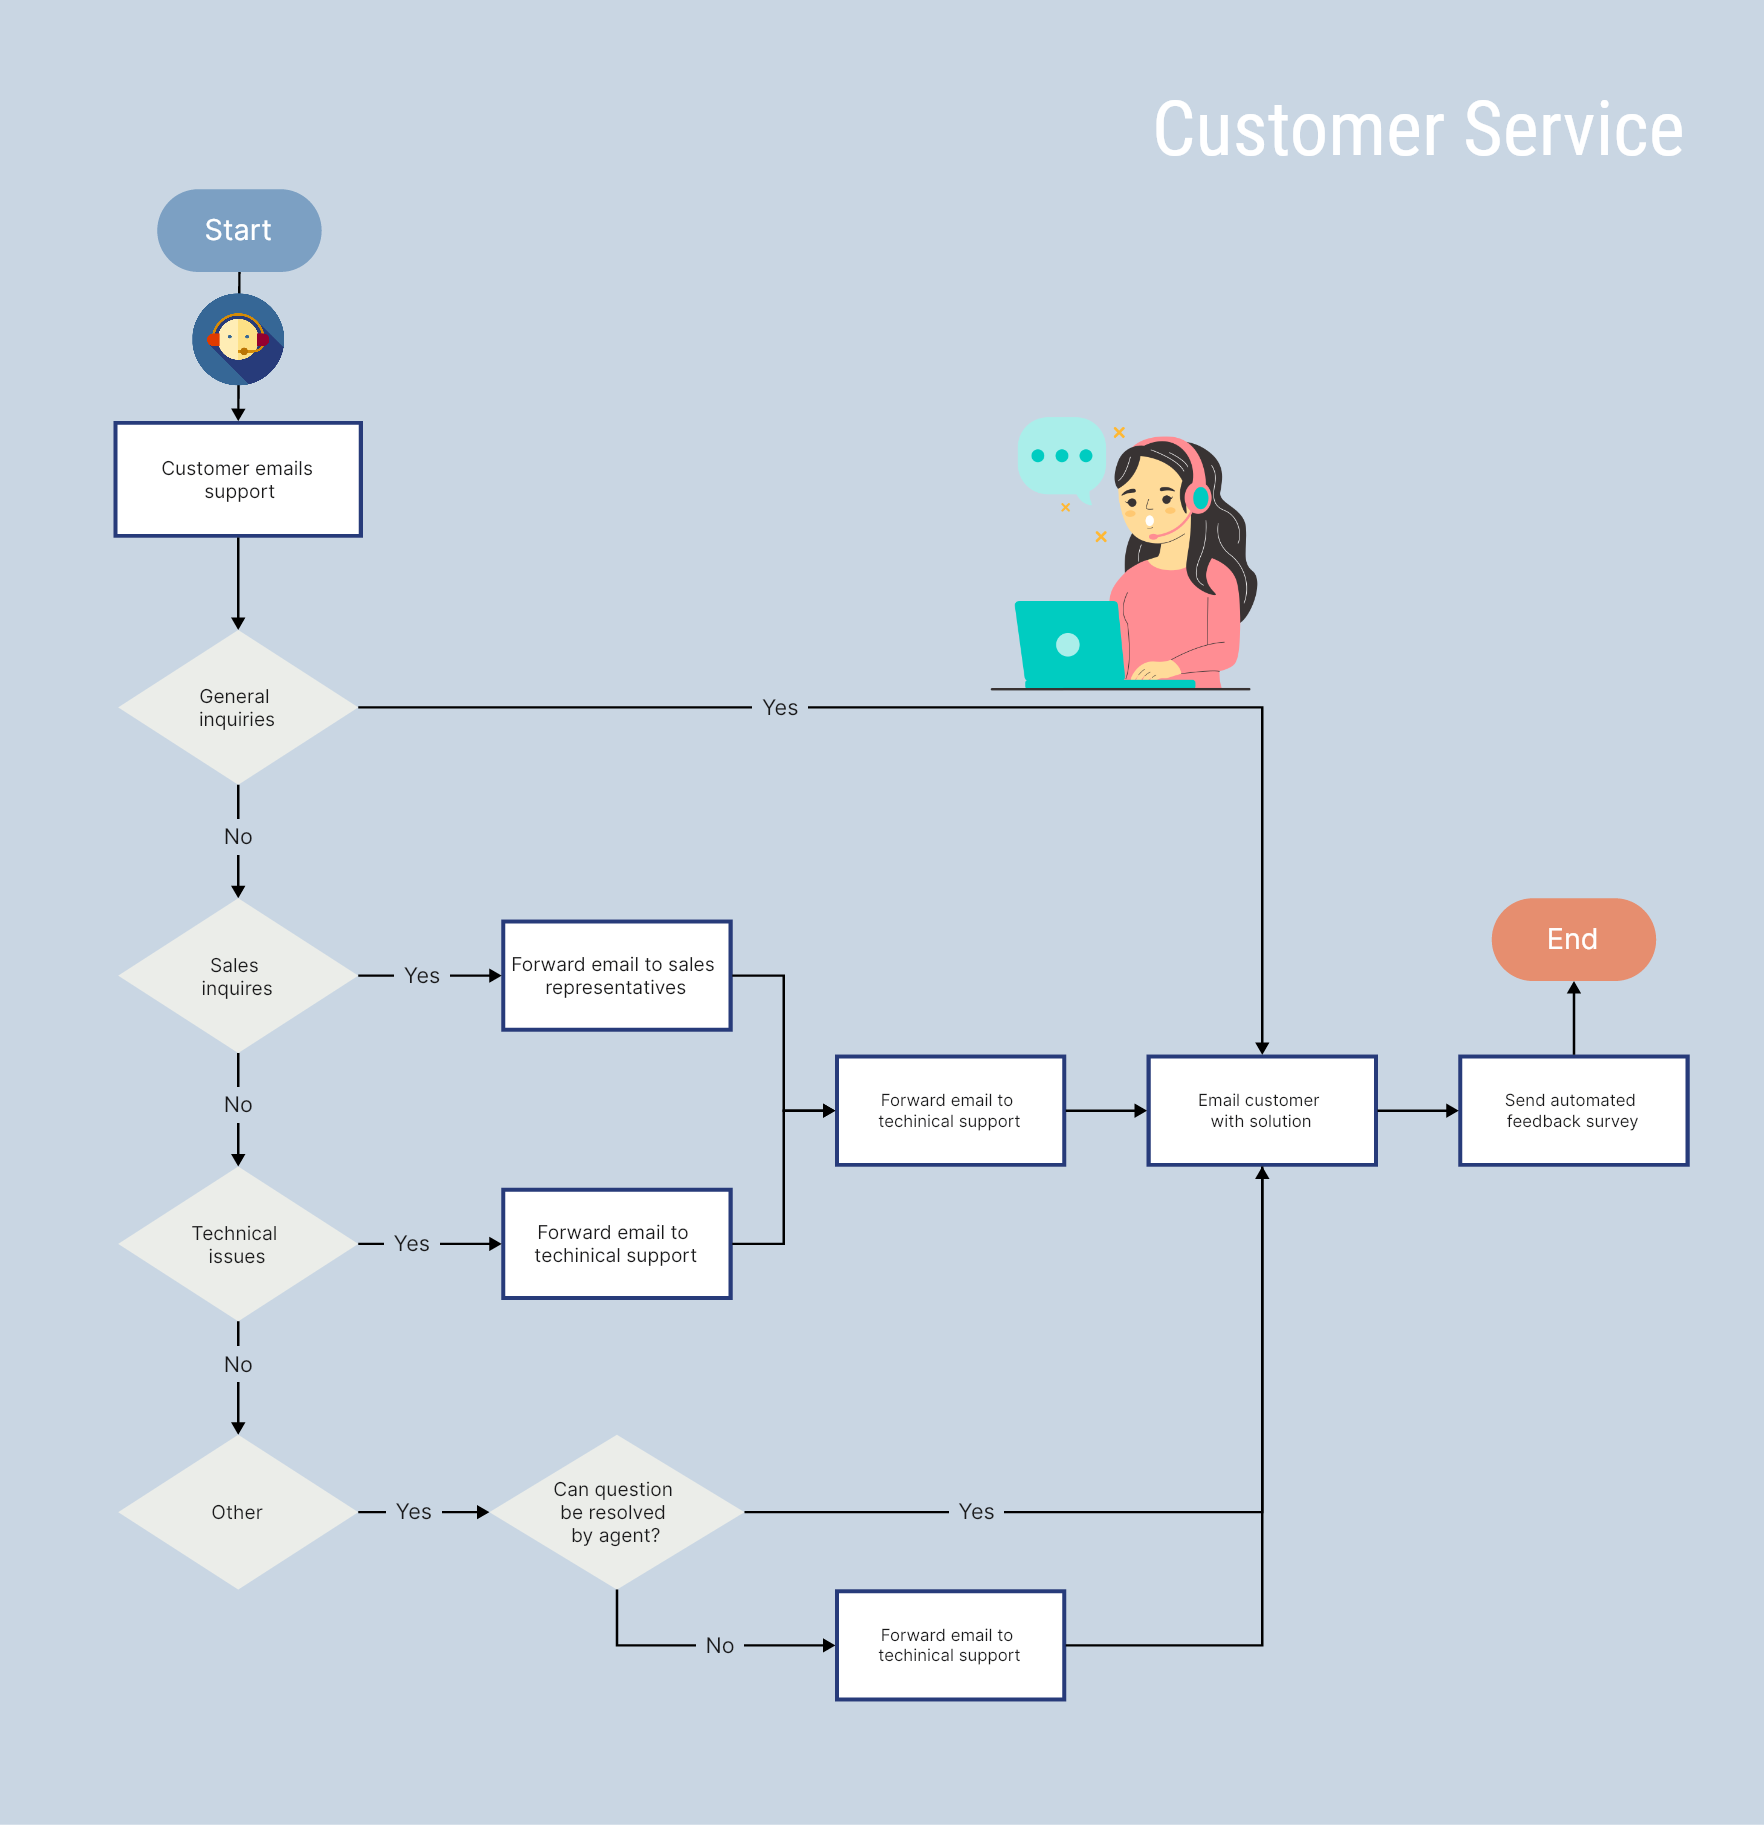 5. Customer Service Flowchart